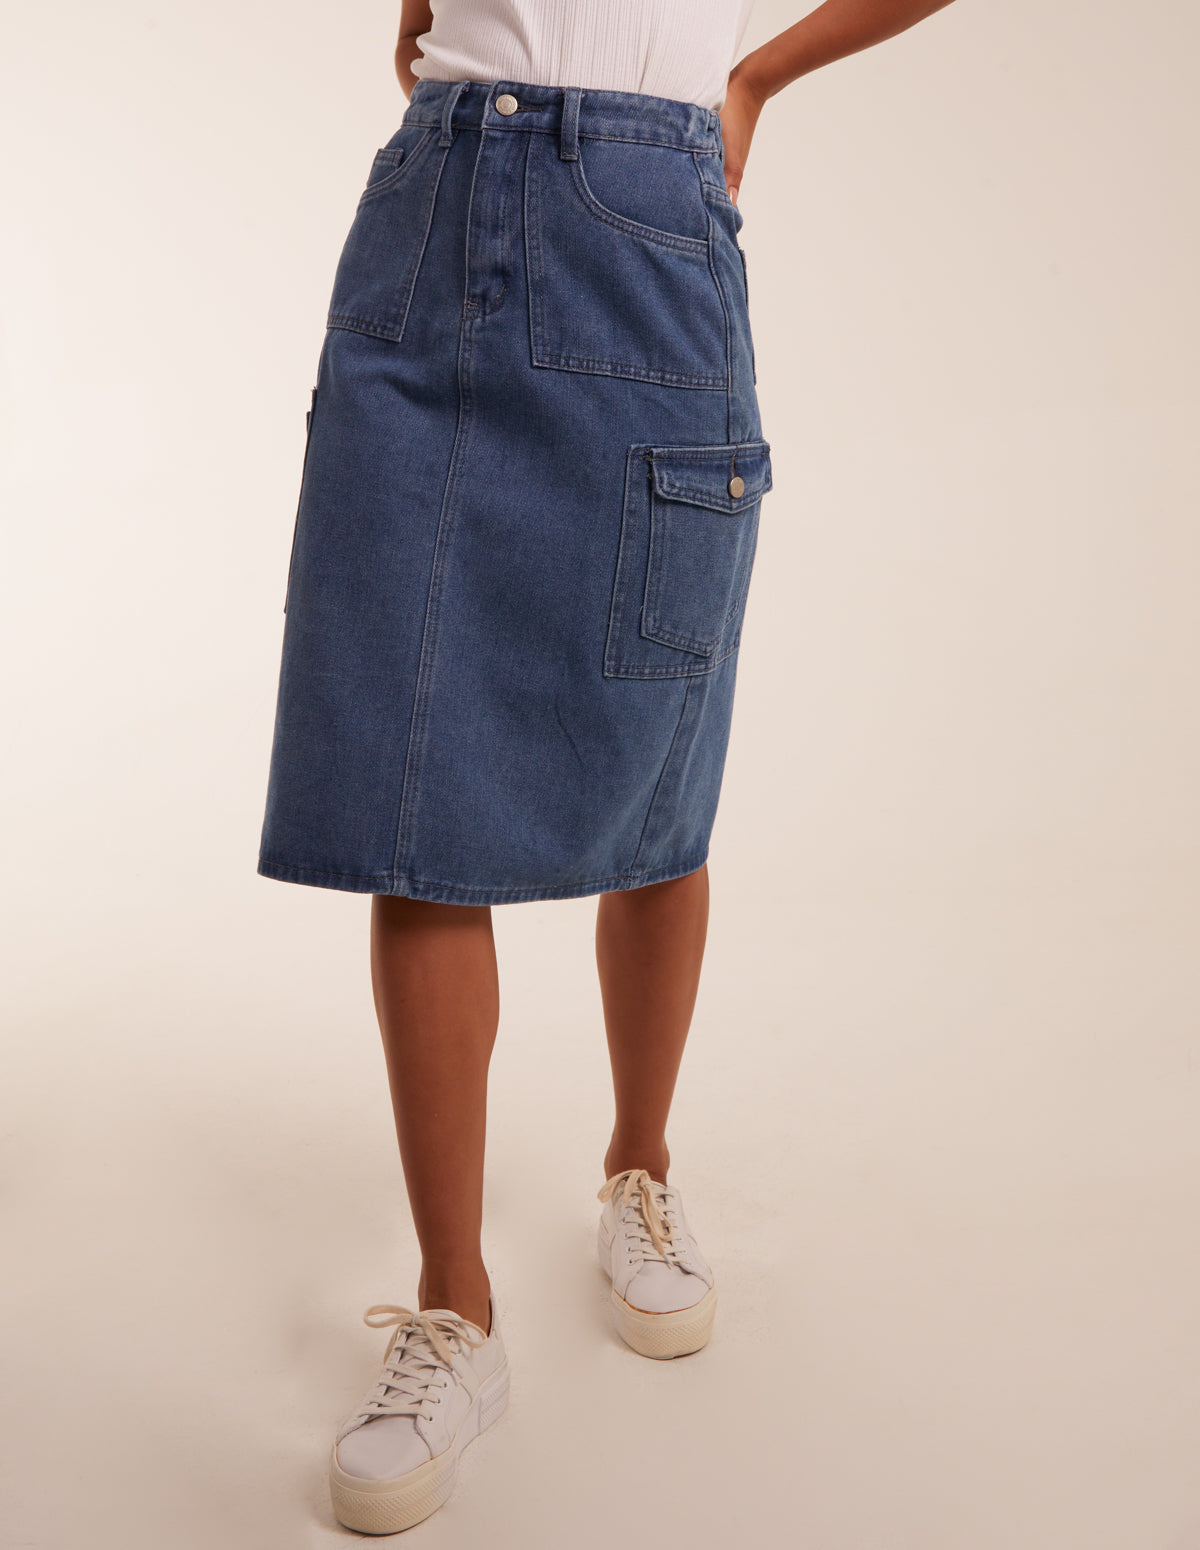 Pocket Denim Skirt - 8 / DENIM